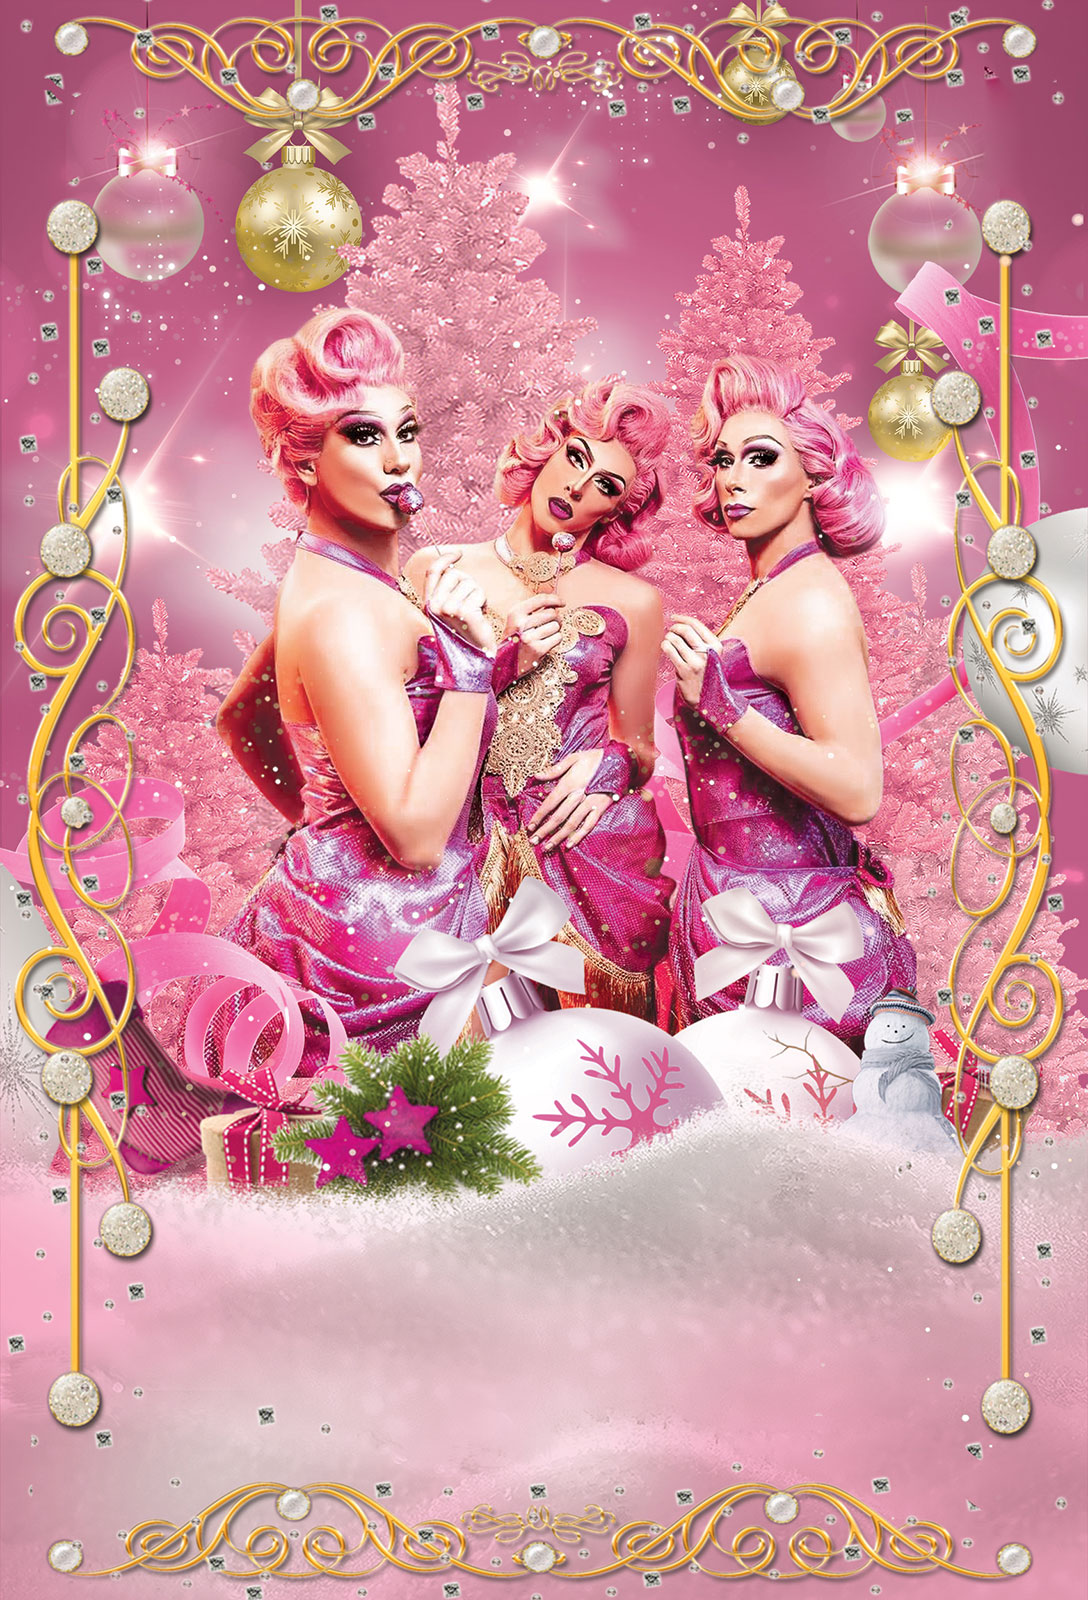 The Globe Girls Christmas entertainment